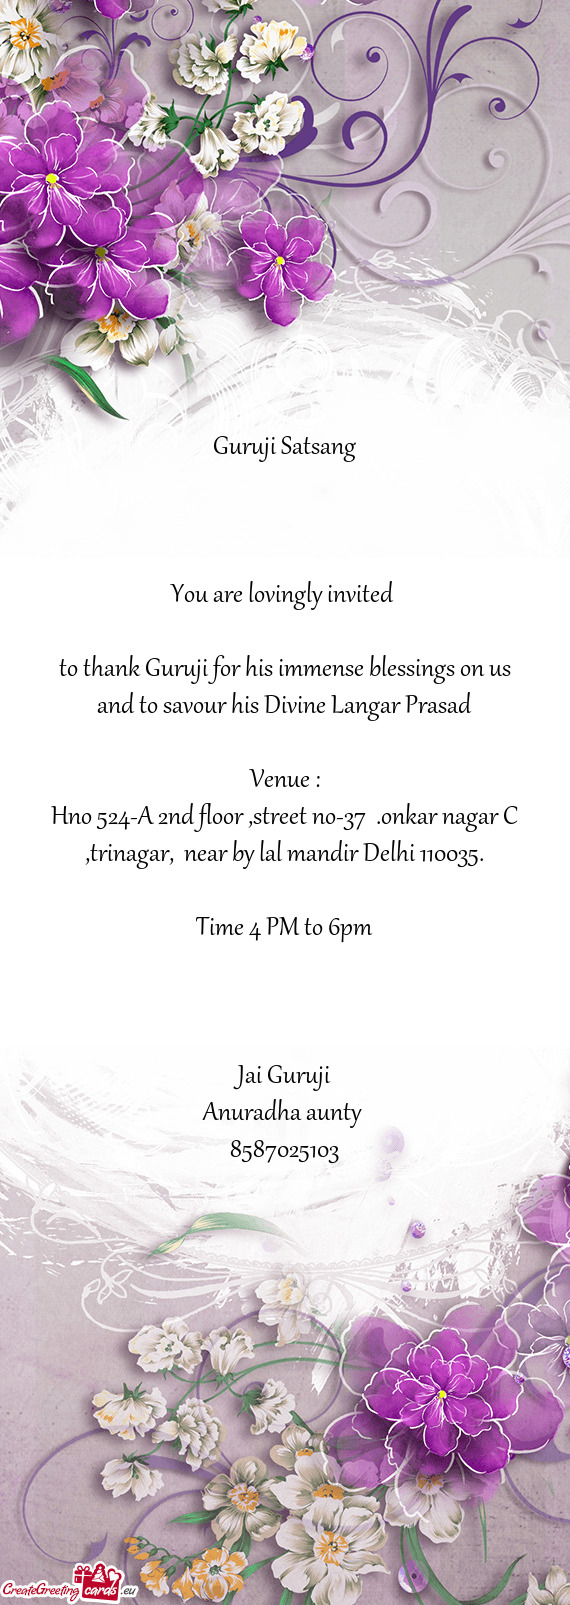 Hno 524-A 2nd floor ,street no-37 .onkar nagar C ,trinagar, near by lal mandir Delhi 110035